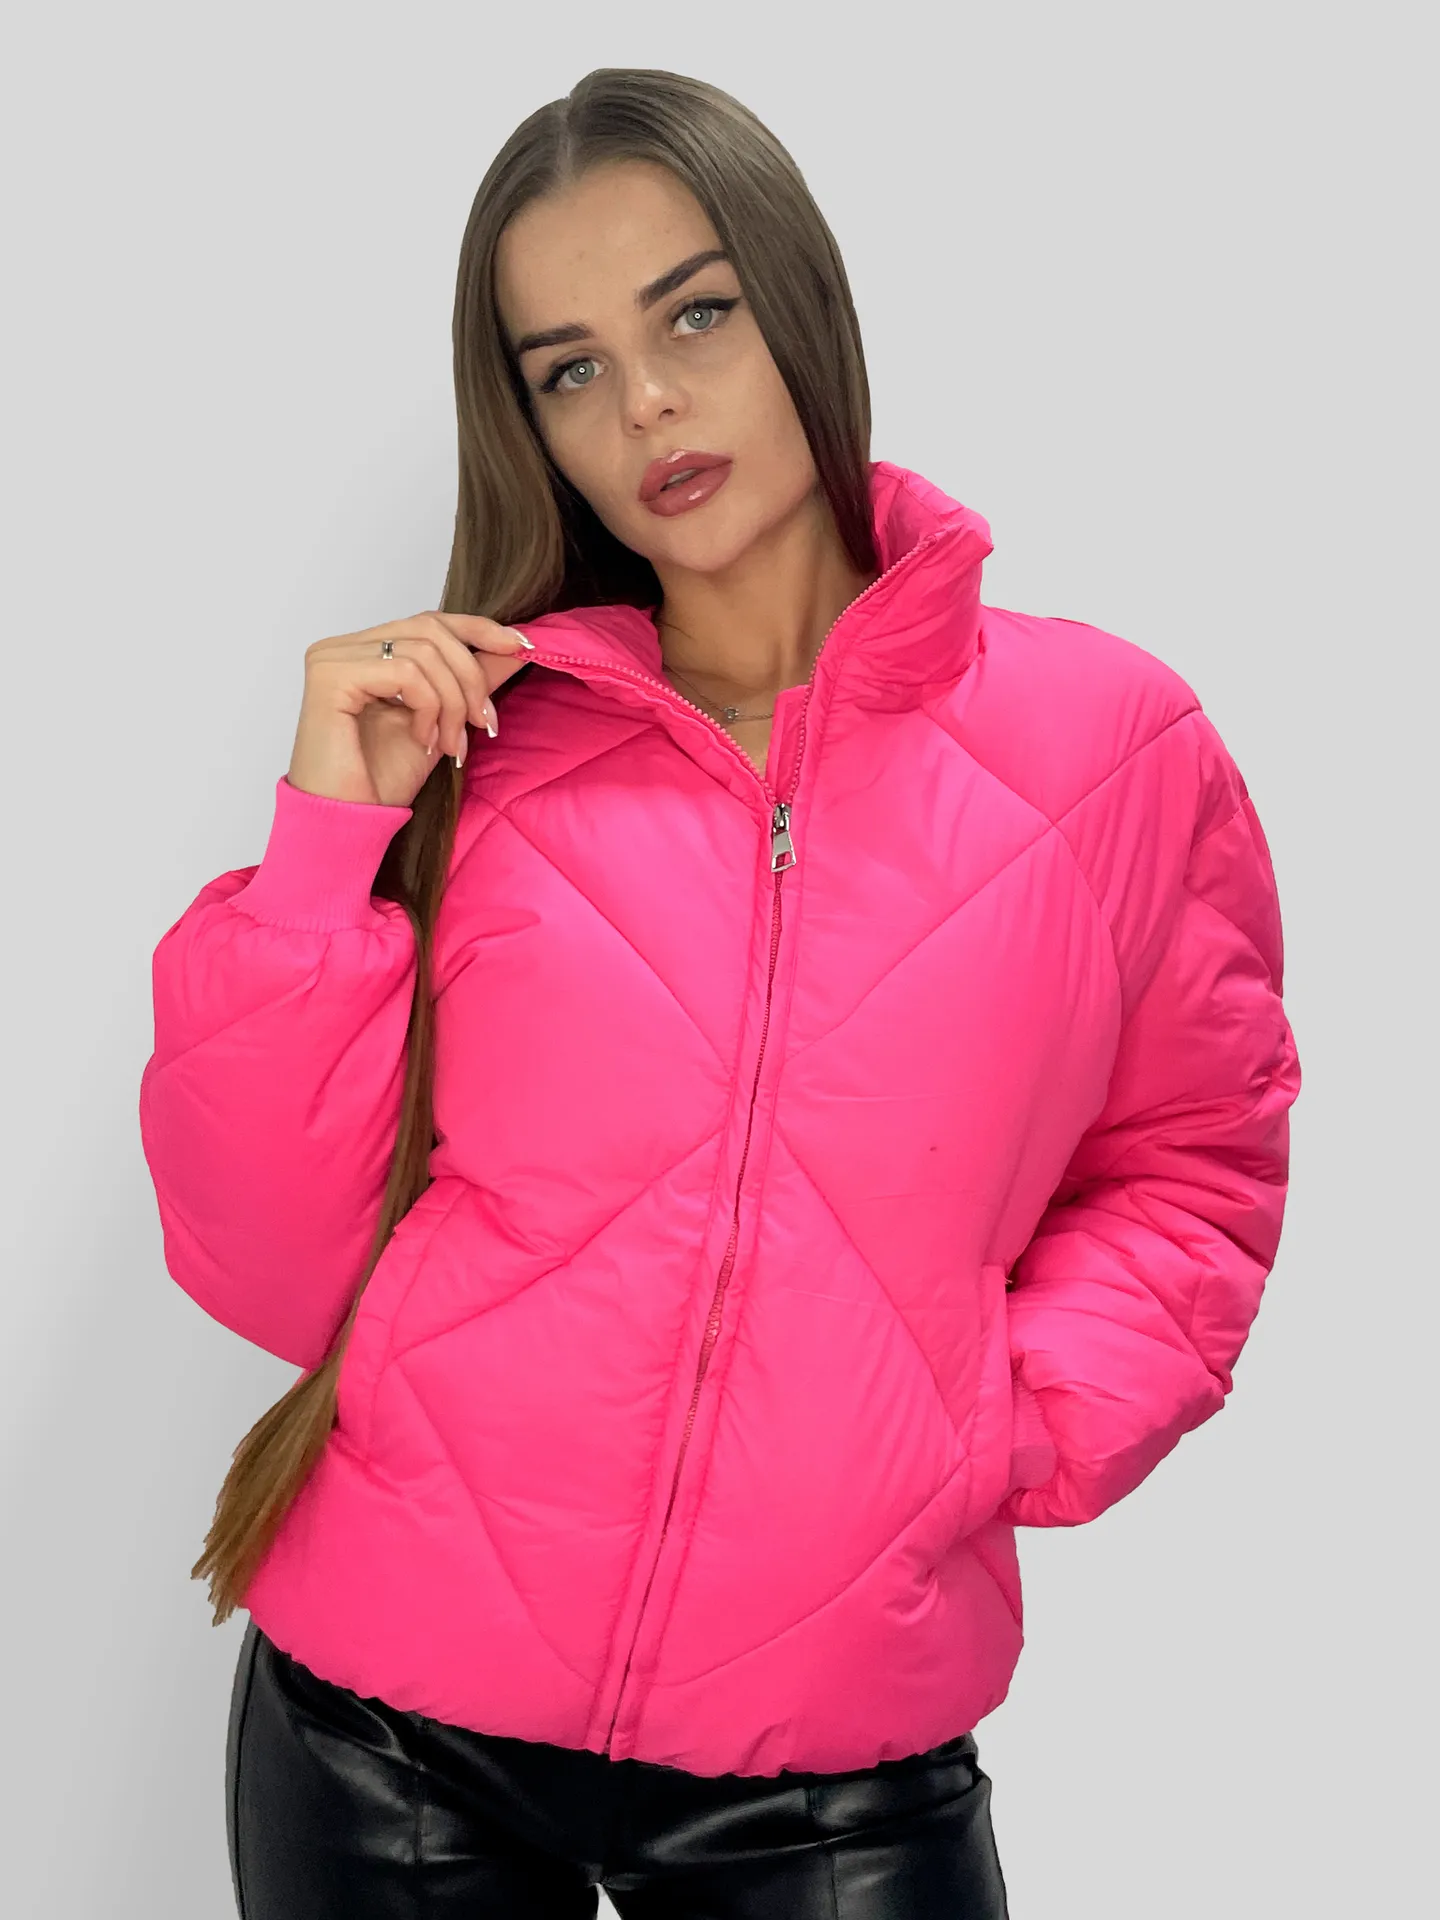 Куртка Moki 2146 на молнии с прорезными карманами и манжетами на рукавах\Розовый Nadya